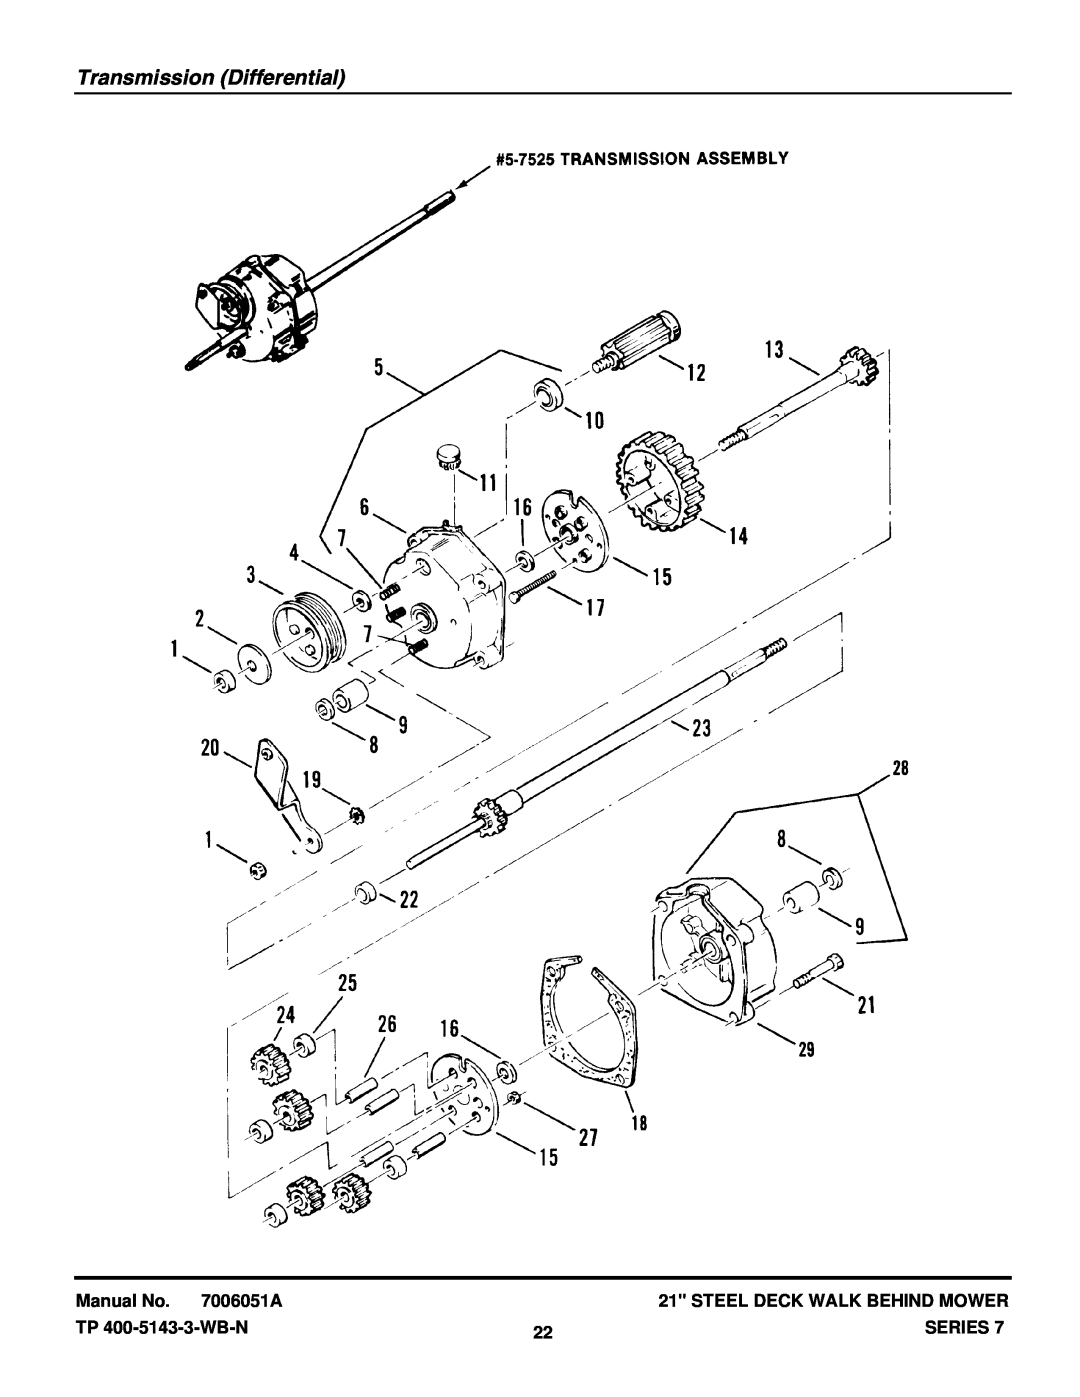 Snapper R21507B Transmission Differential, Manual No. 7006051A, Steel Deck Walk Behind Mower, TP 400-5143-3-WB-N, Series 